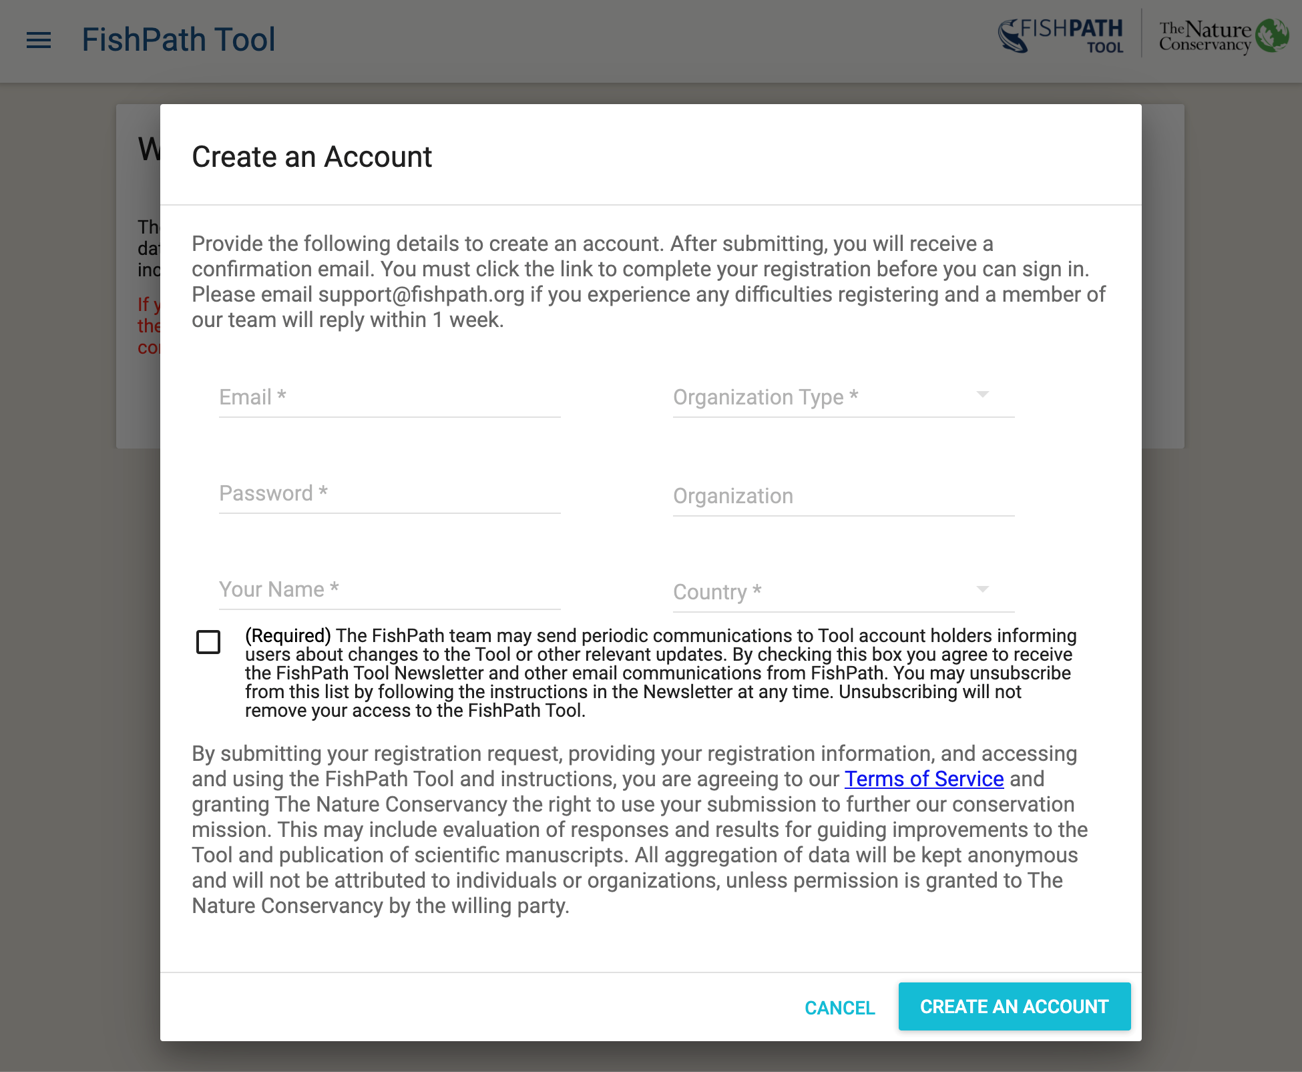 “Create an Account” screen of the FishPath Tool.